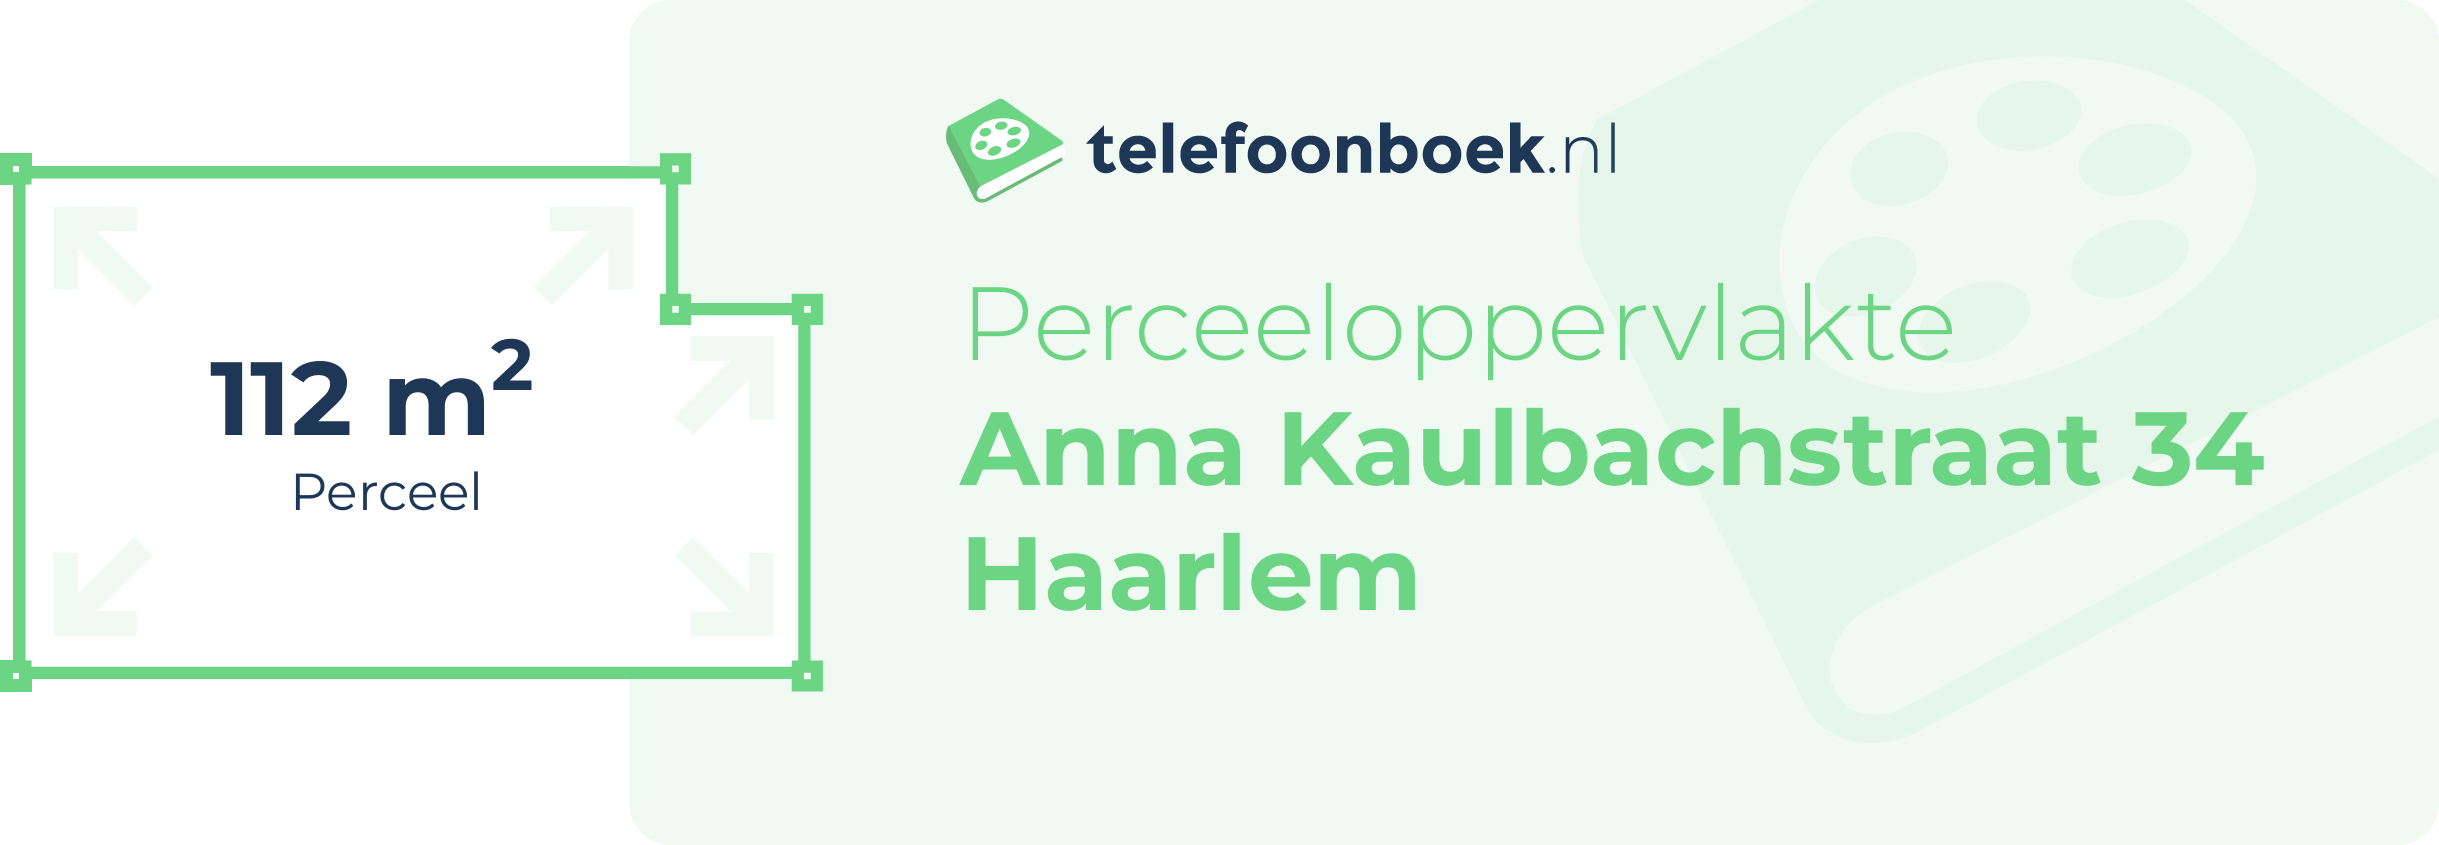 Perceeloppervlakte Anna Kaulbachstraat 34 Haarlem